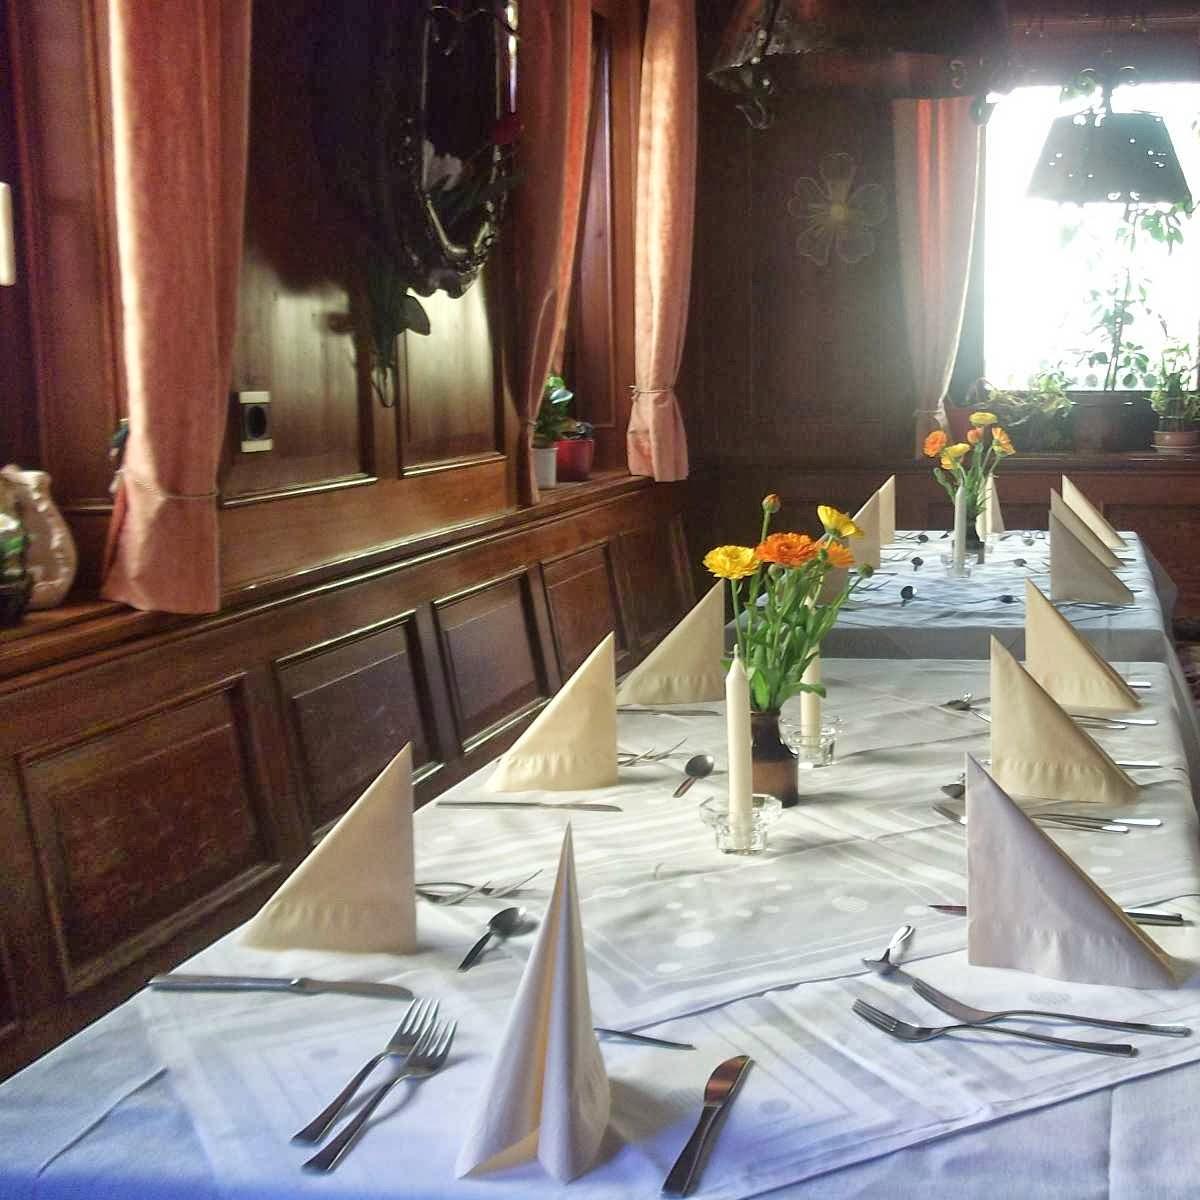 Restaurant "Gasthaus Adler" in Ditzingen